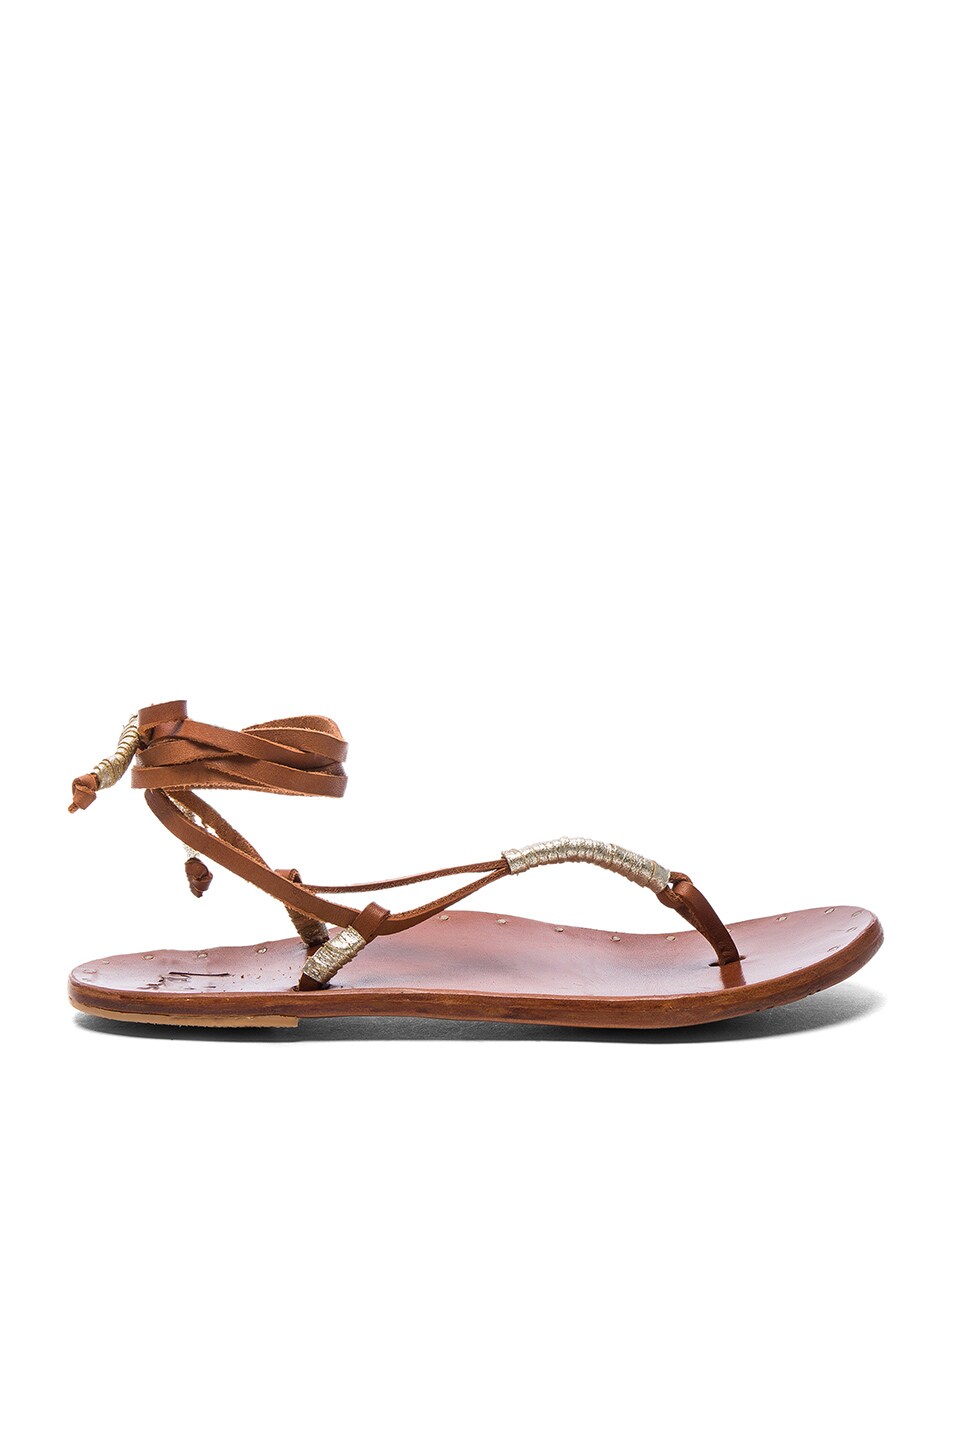 Image 1 of Beek The Crane Sandals in Tan & Platinum